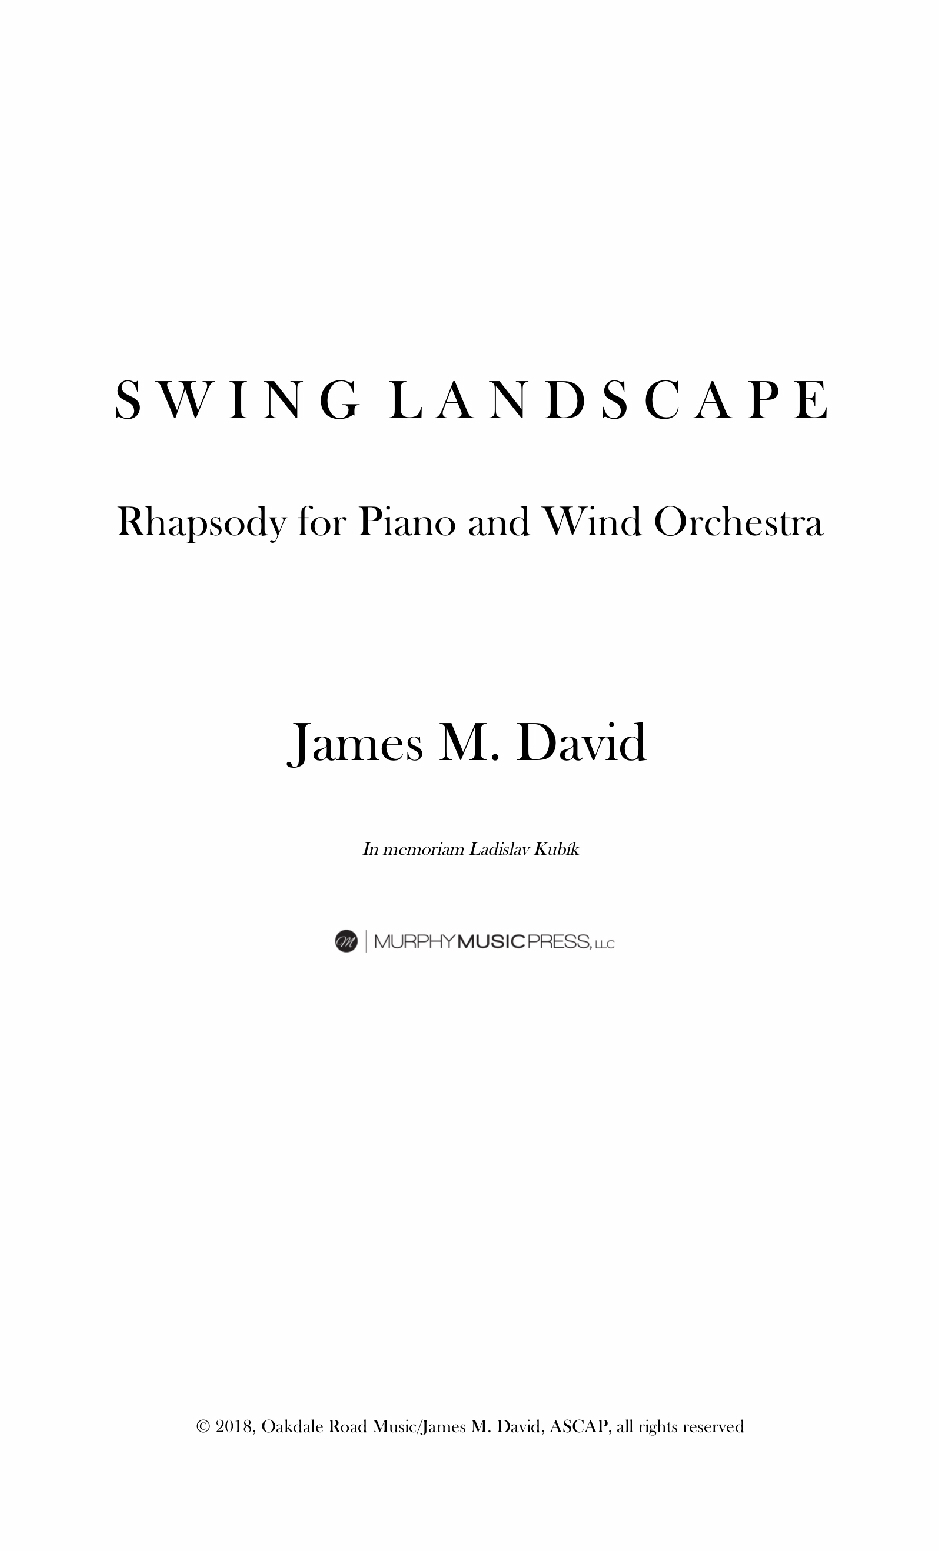 Swing Landscape by James David